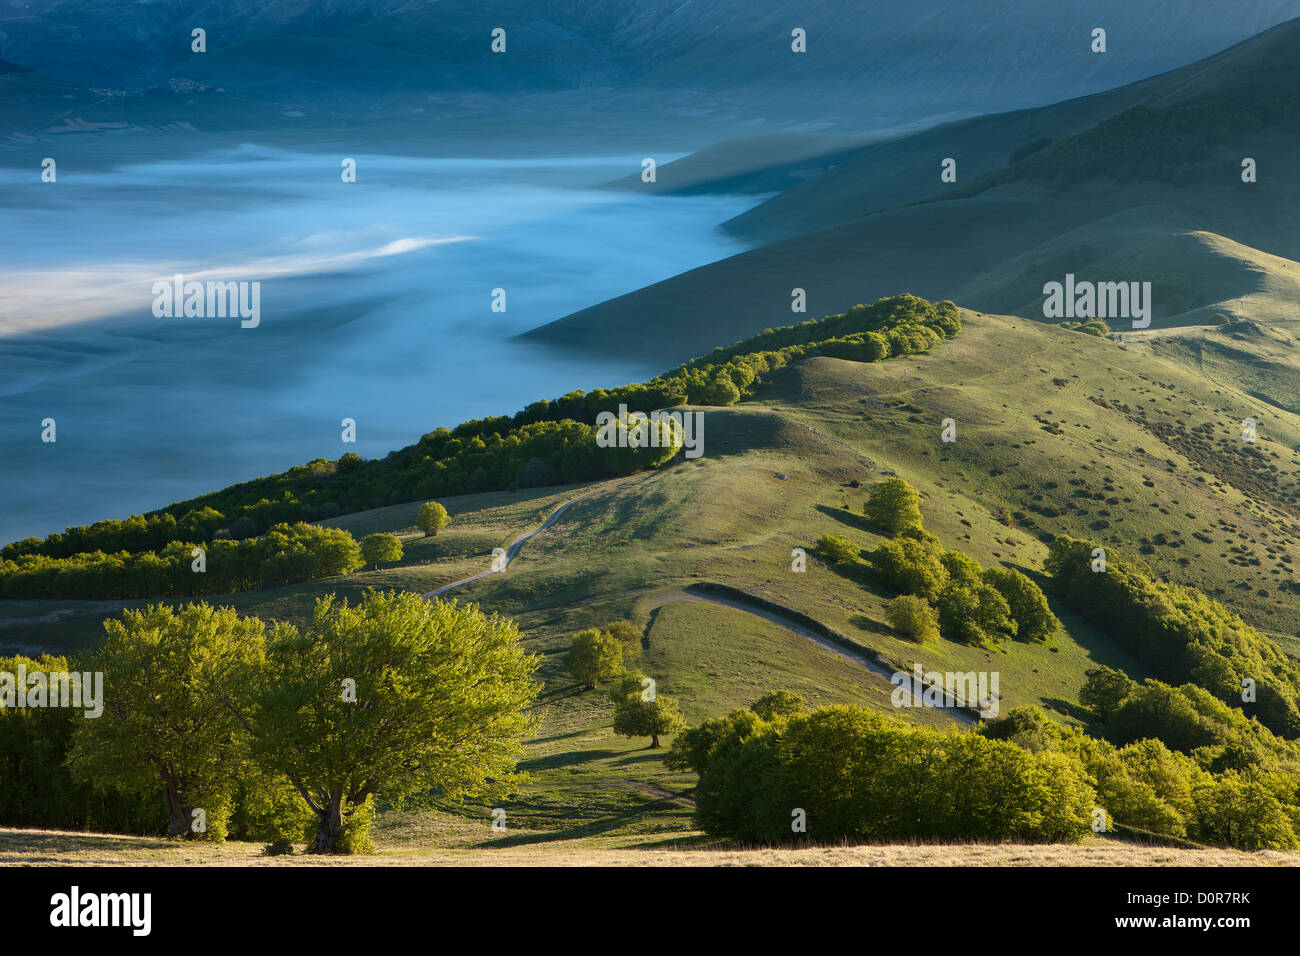 the Piano Grande at dawn, Monti Sibillini National Park, Umbria, Italy Stock Photo